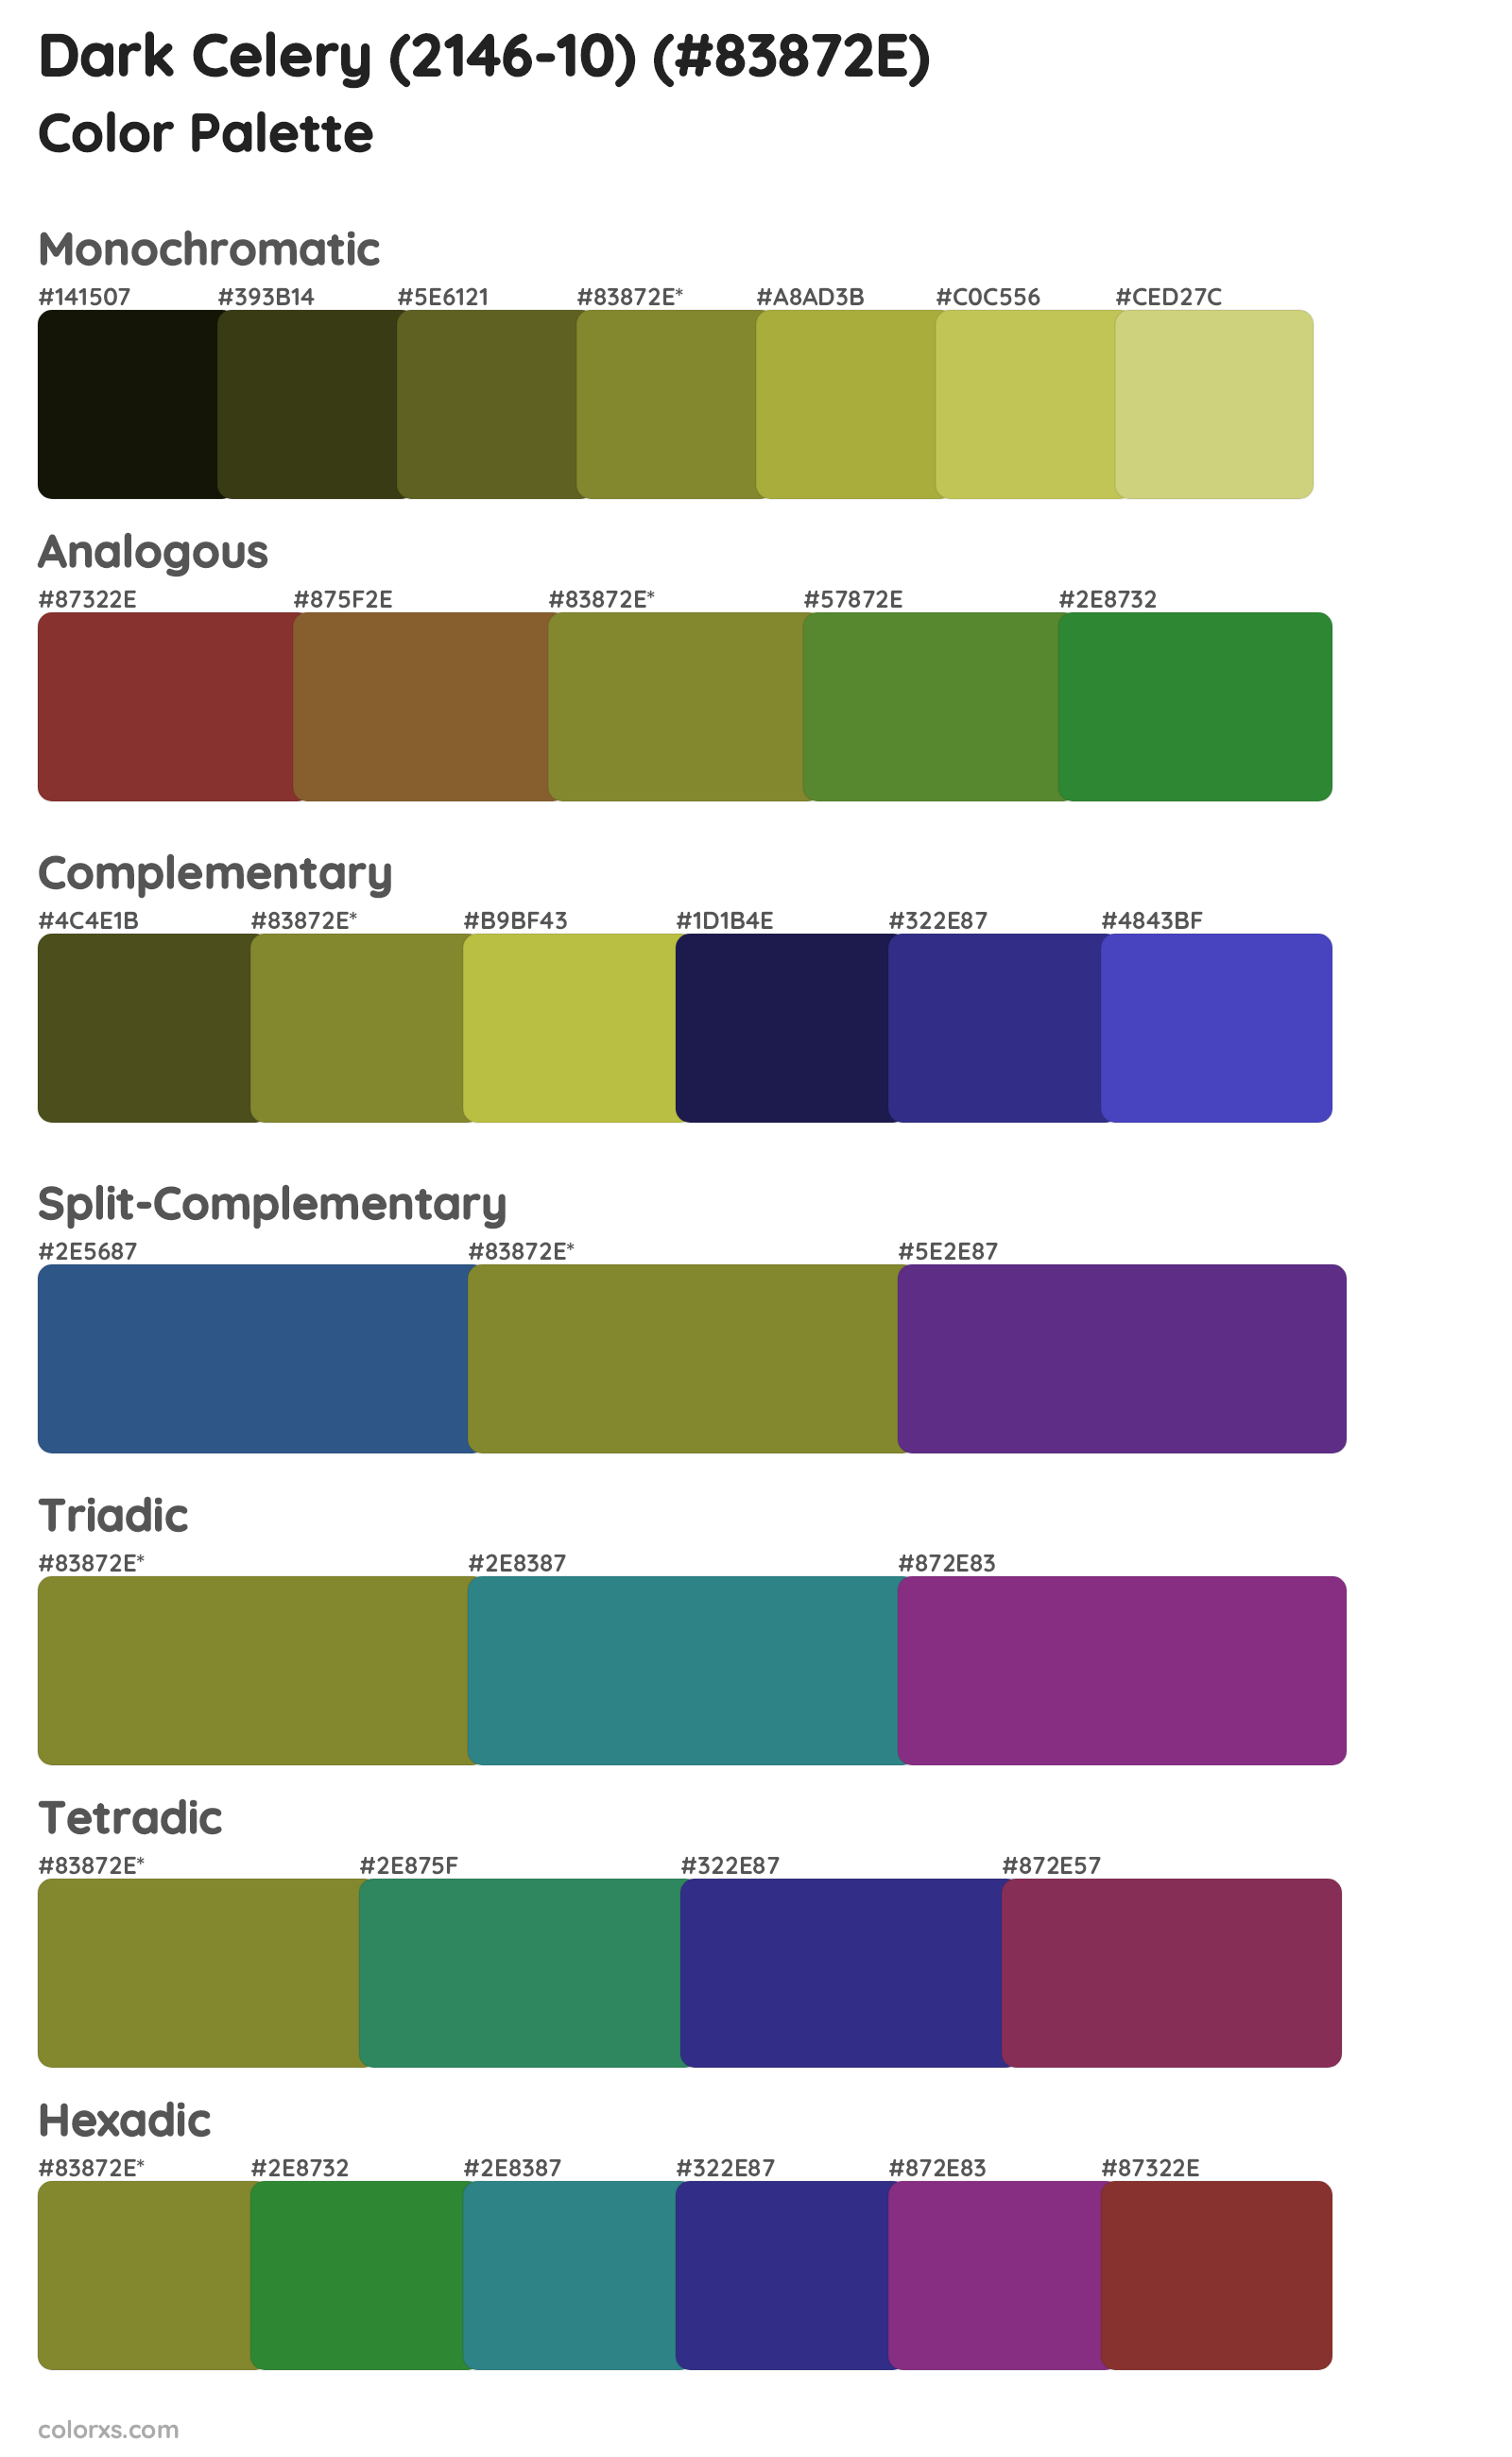 Dark Celery (2146-10) Color Scheme Palettes